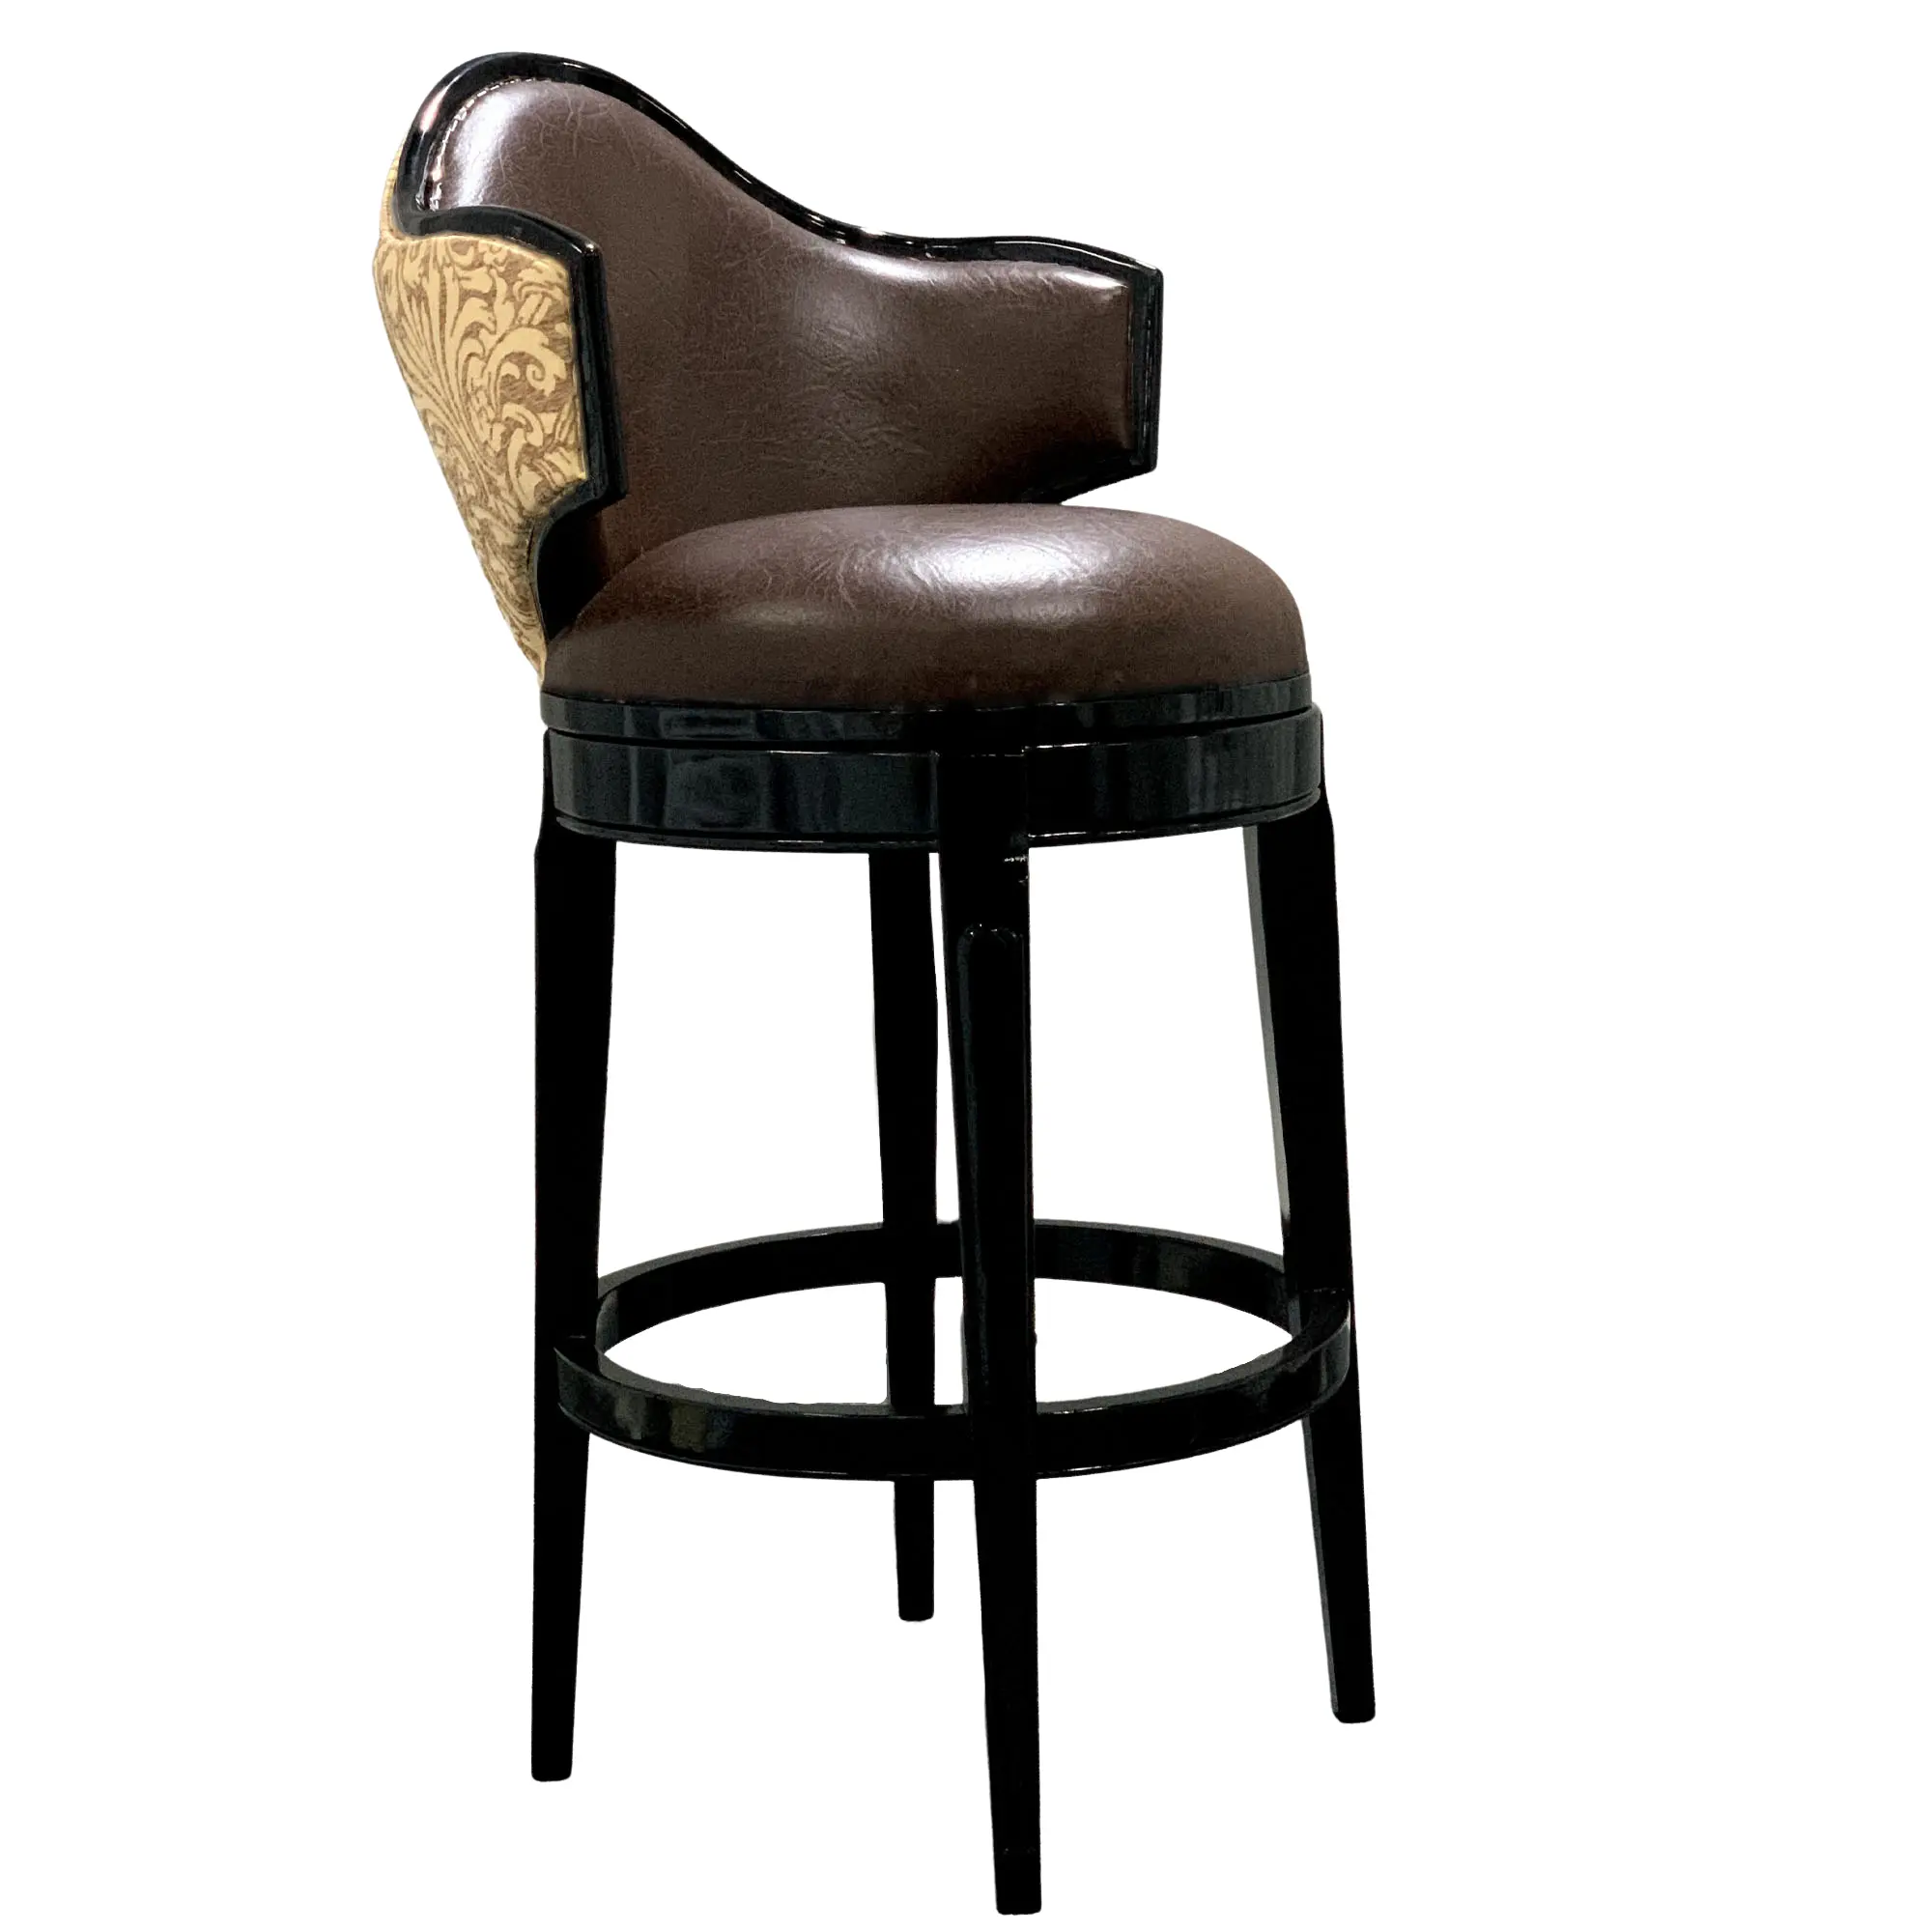 Taburete de Bar tapizado con diseño giratorio, mueble de cocina personalizado, con respaldo de cuero sintético, taburetes de Bar, silla alta, barato, gran oferta